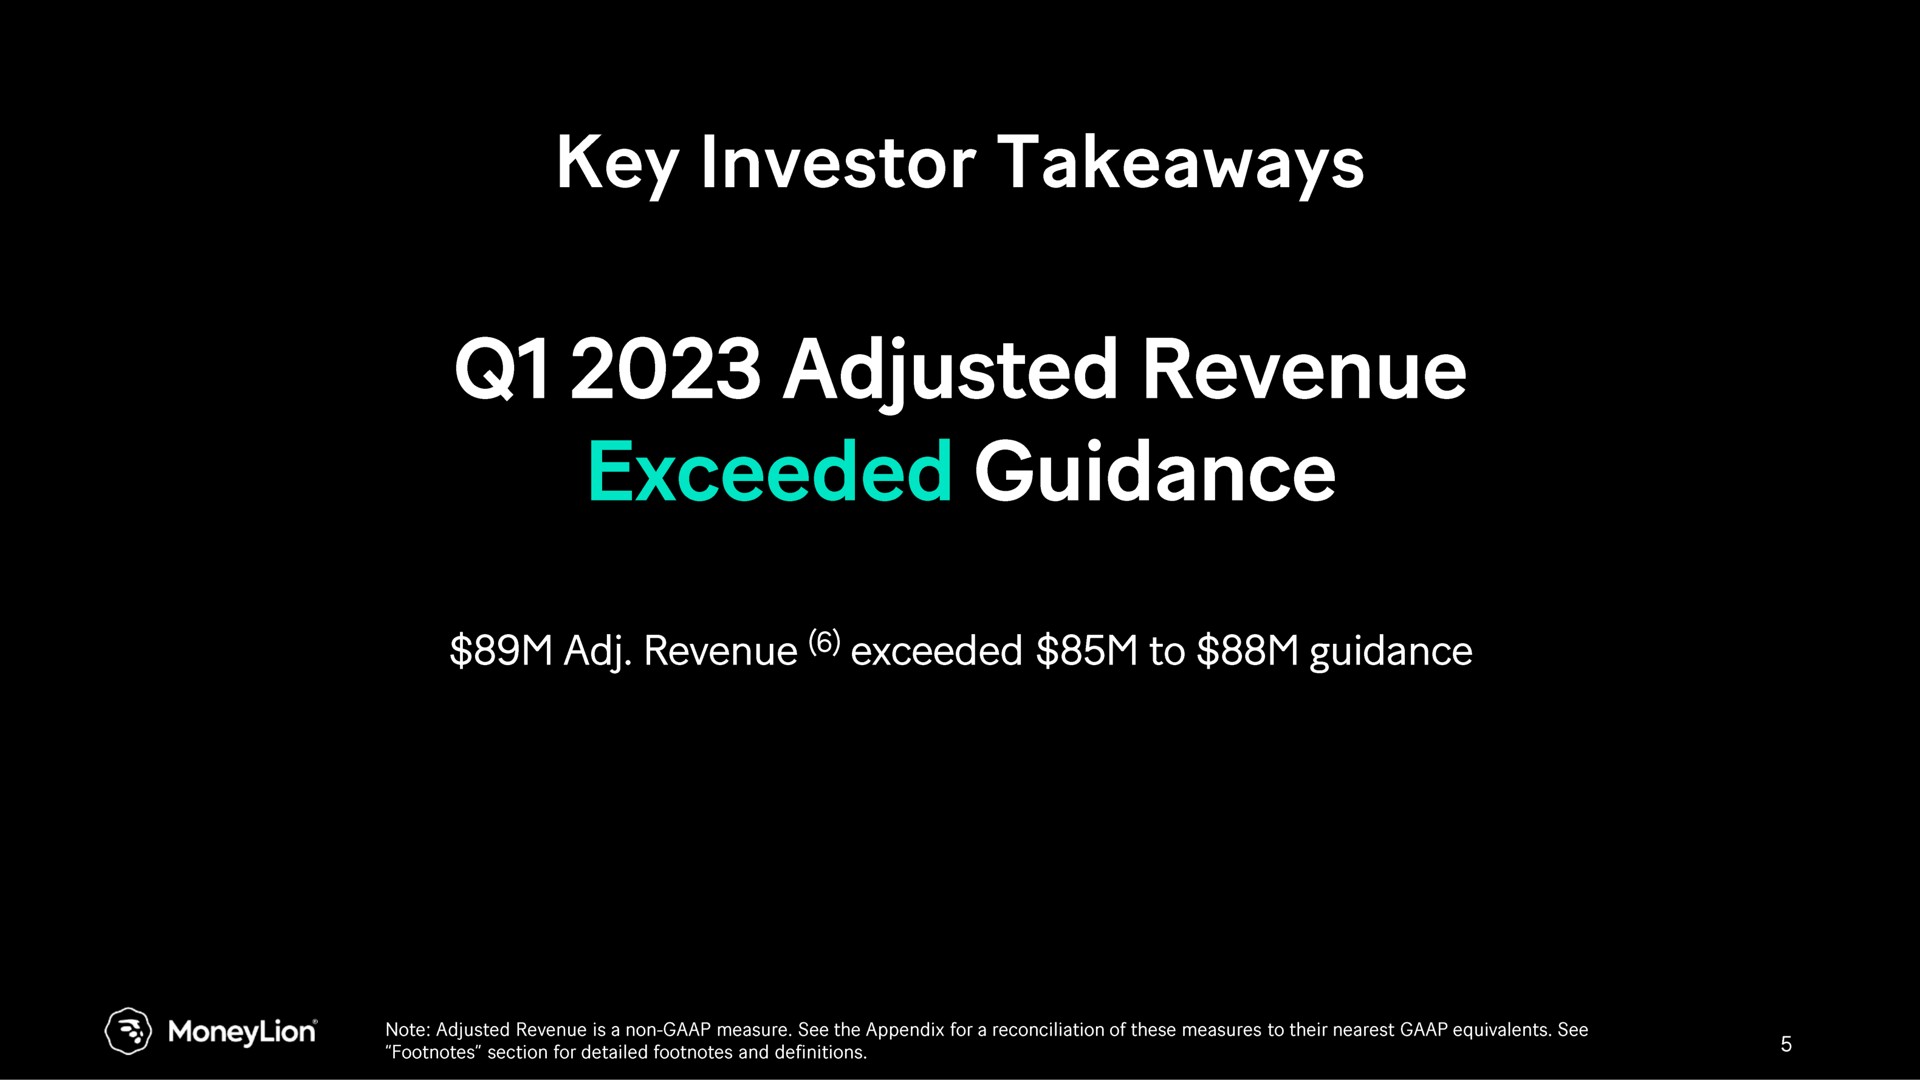 key investor adjusted revenue exceeded guidance | MoneyLion